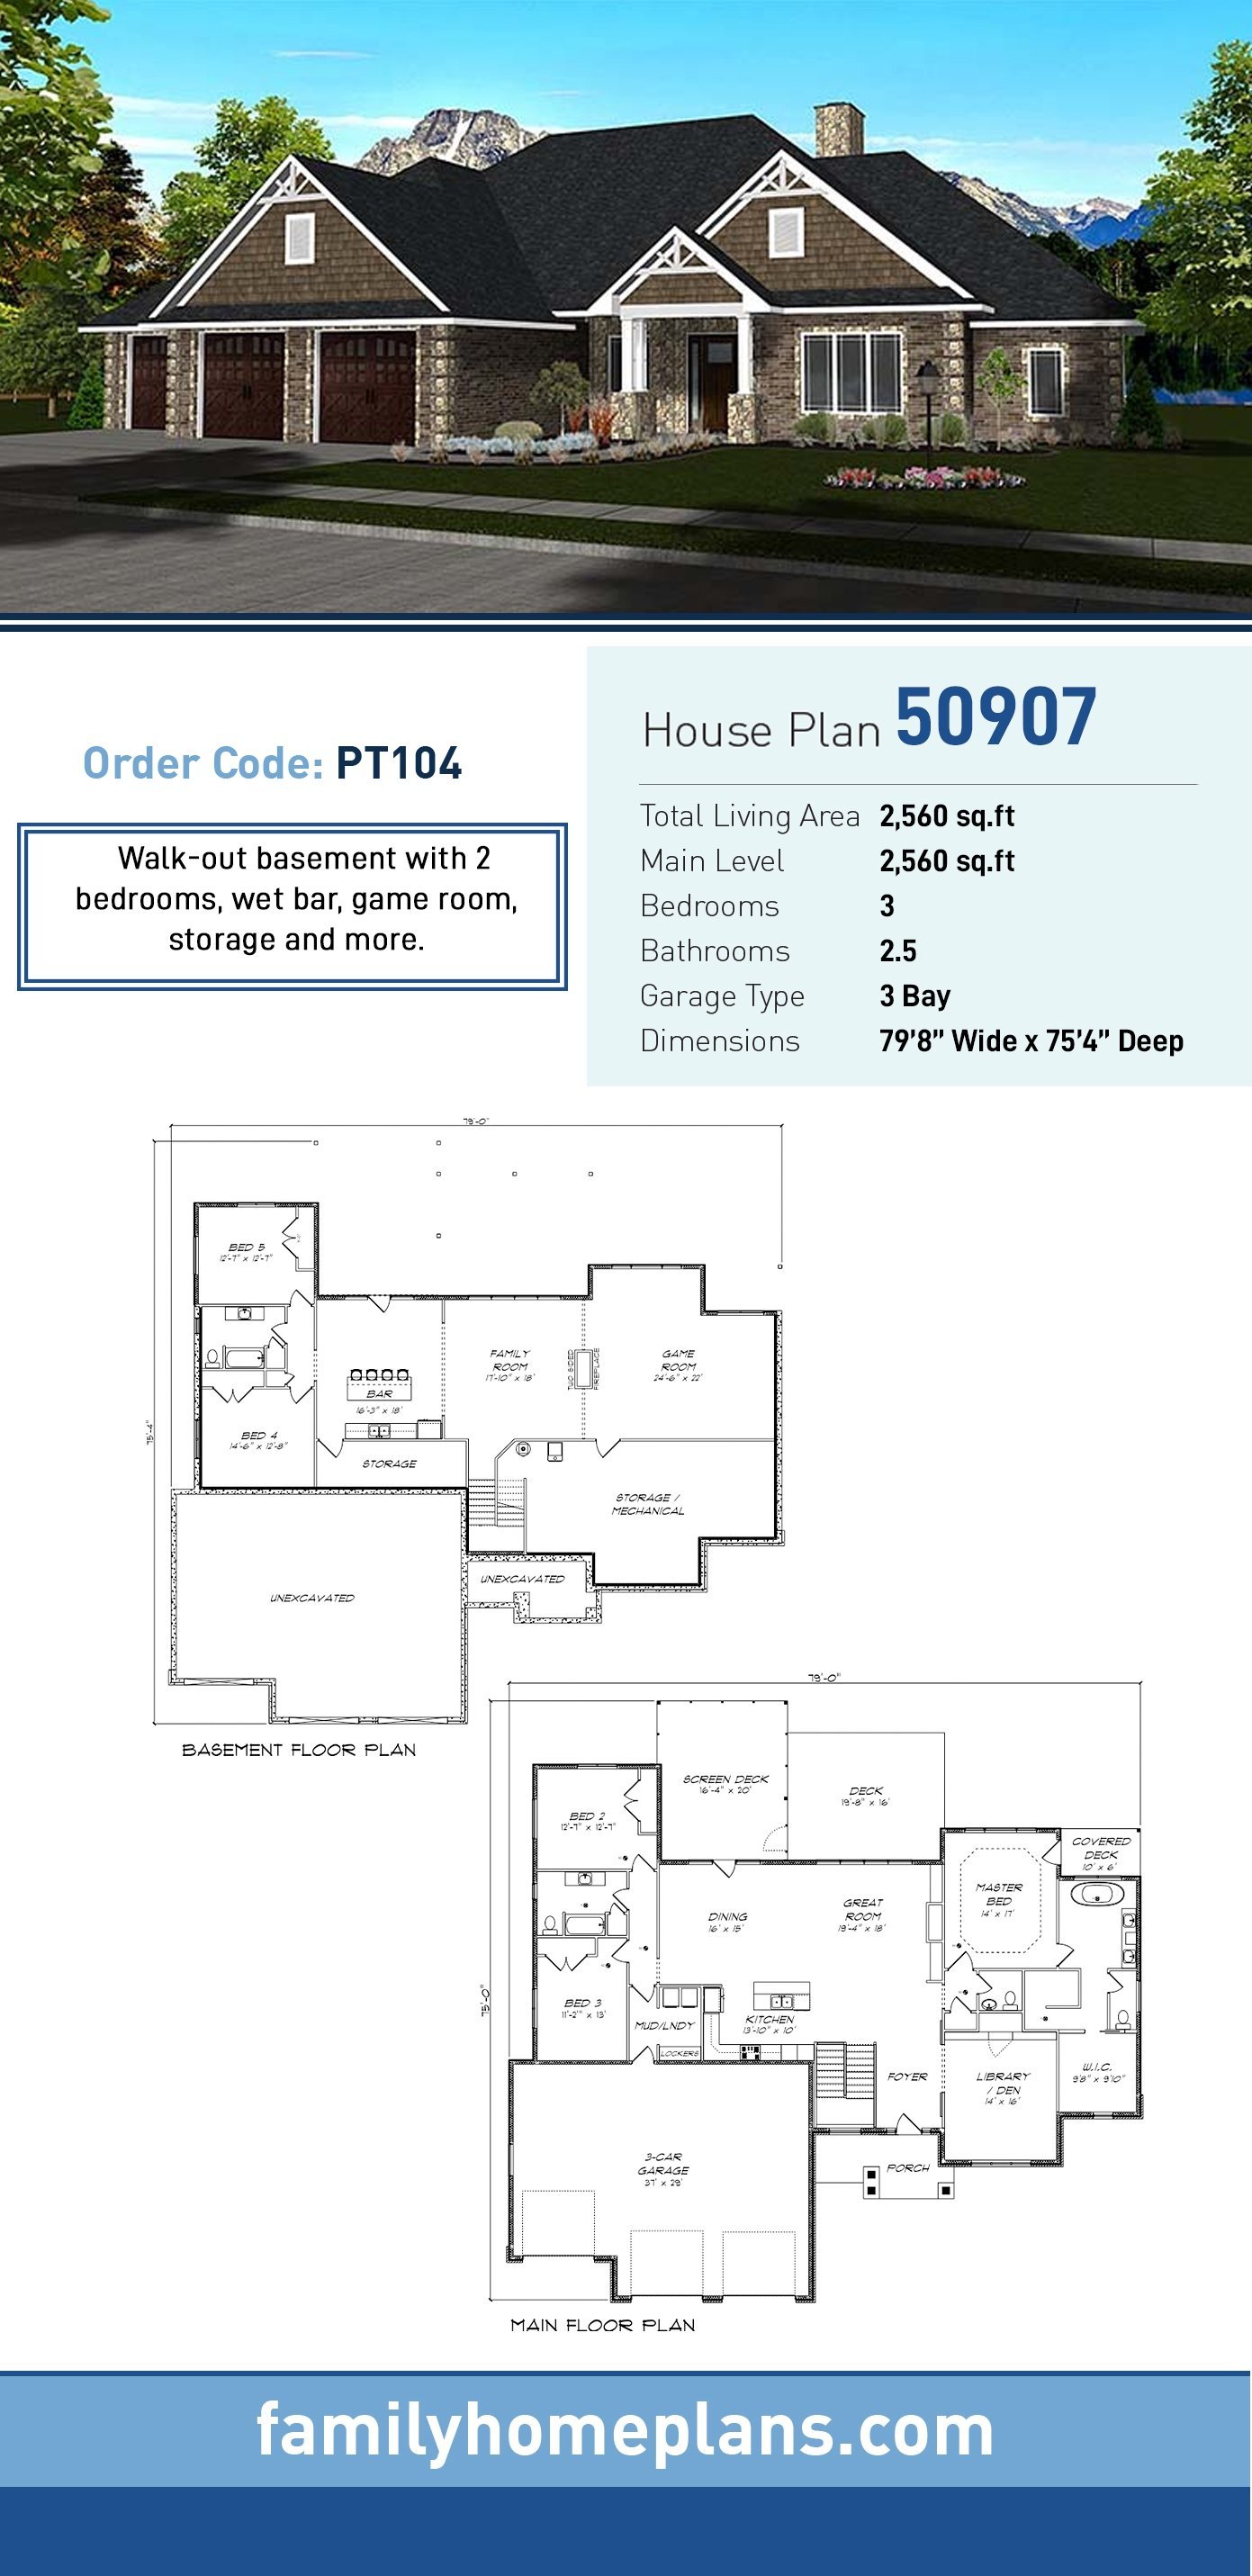 House Plan 50907